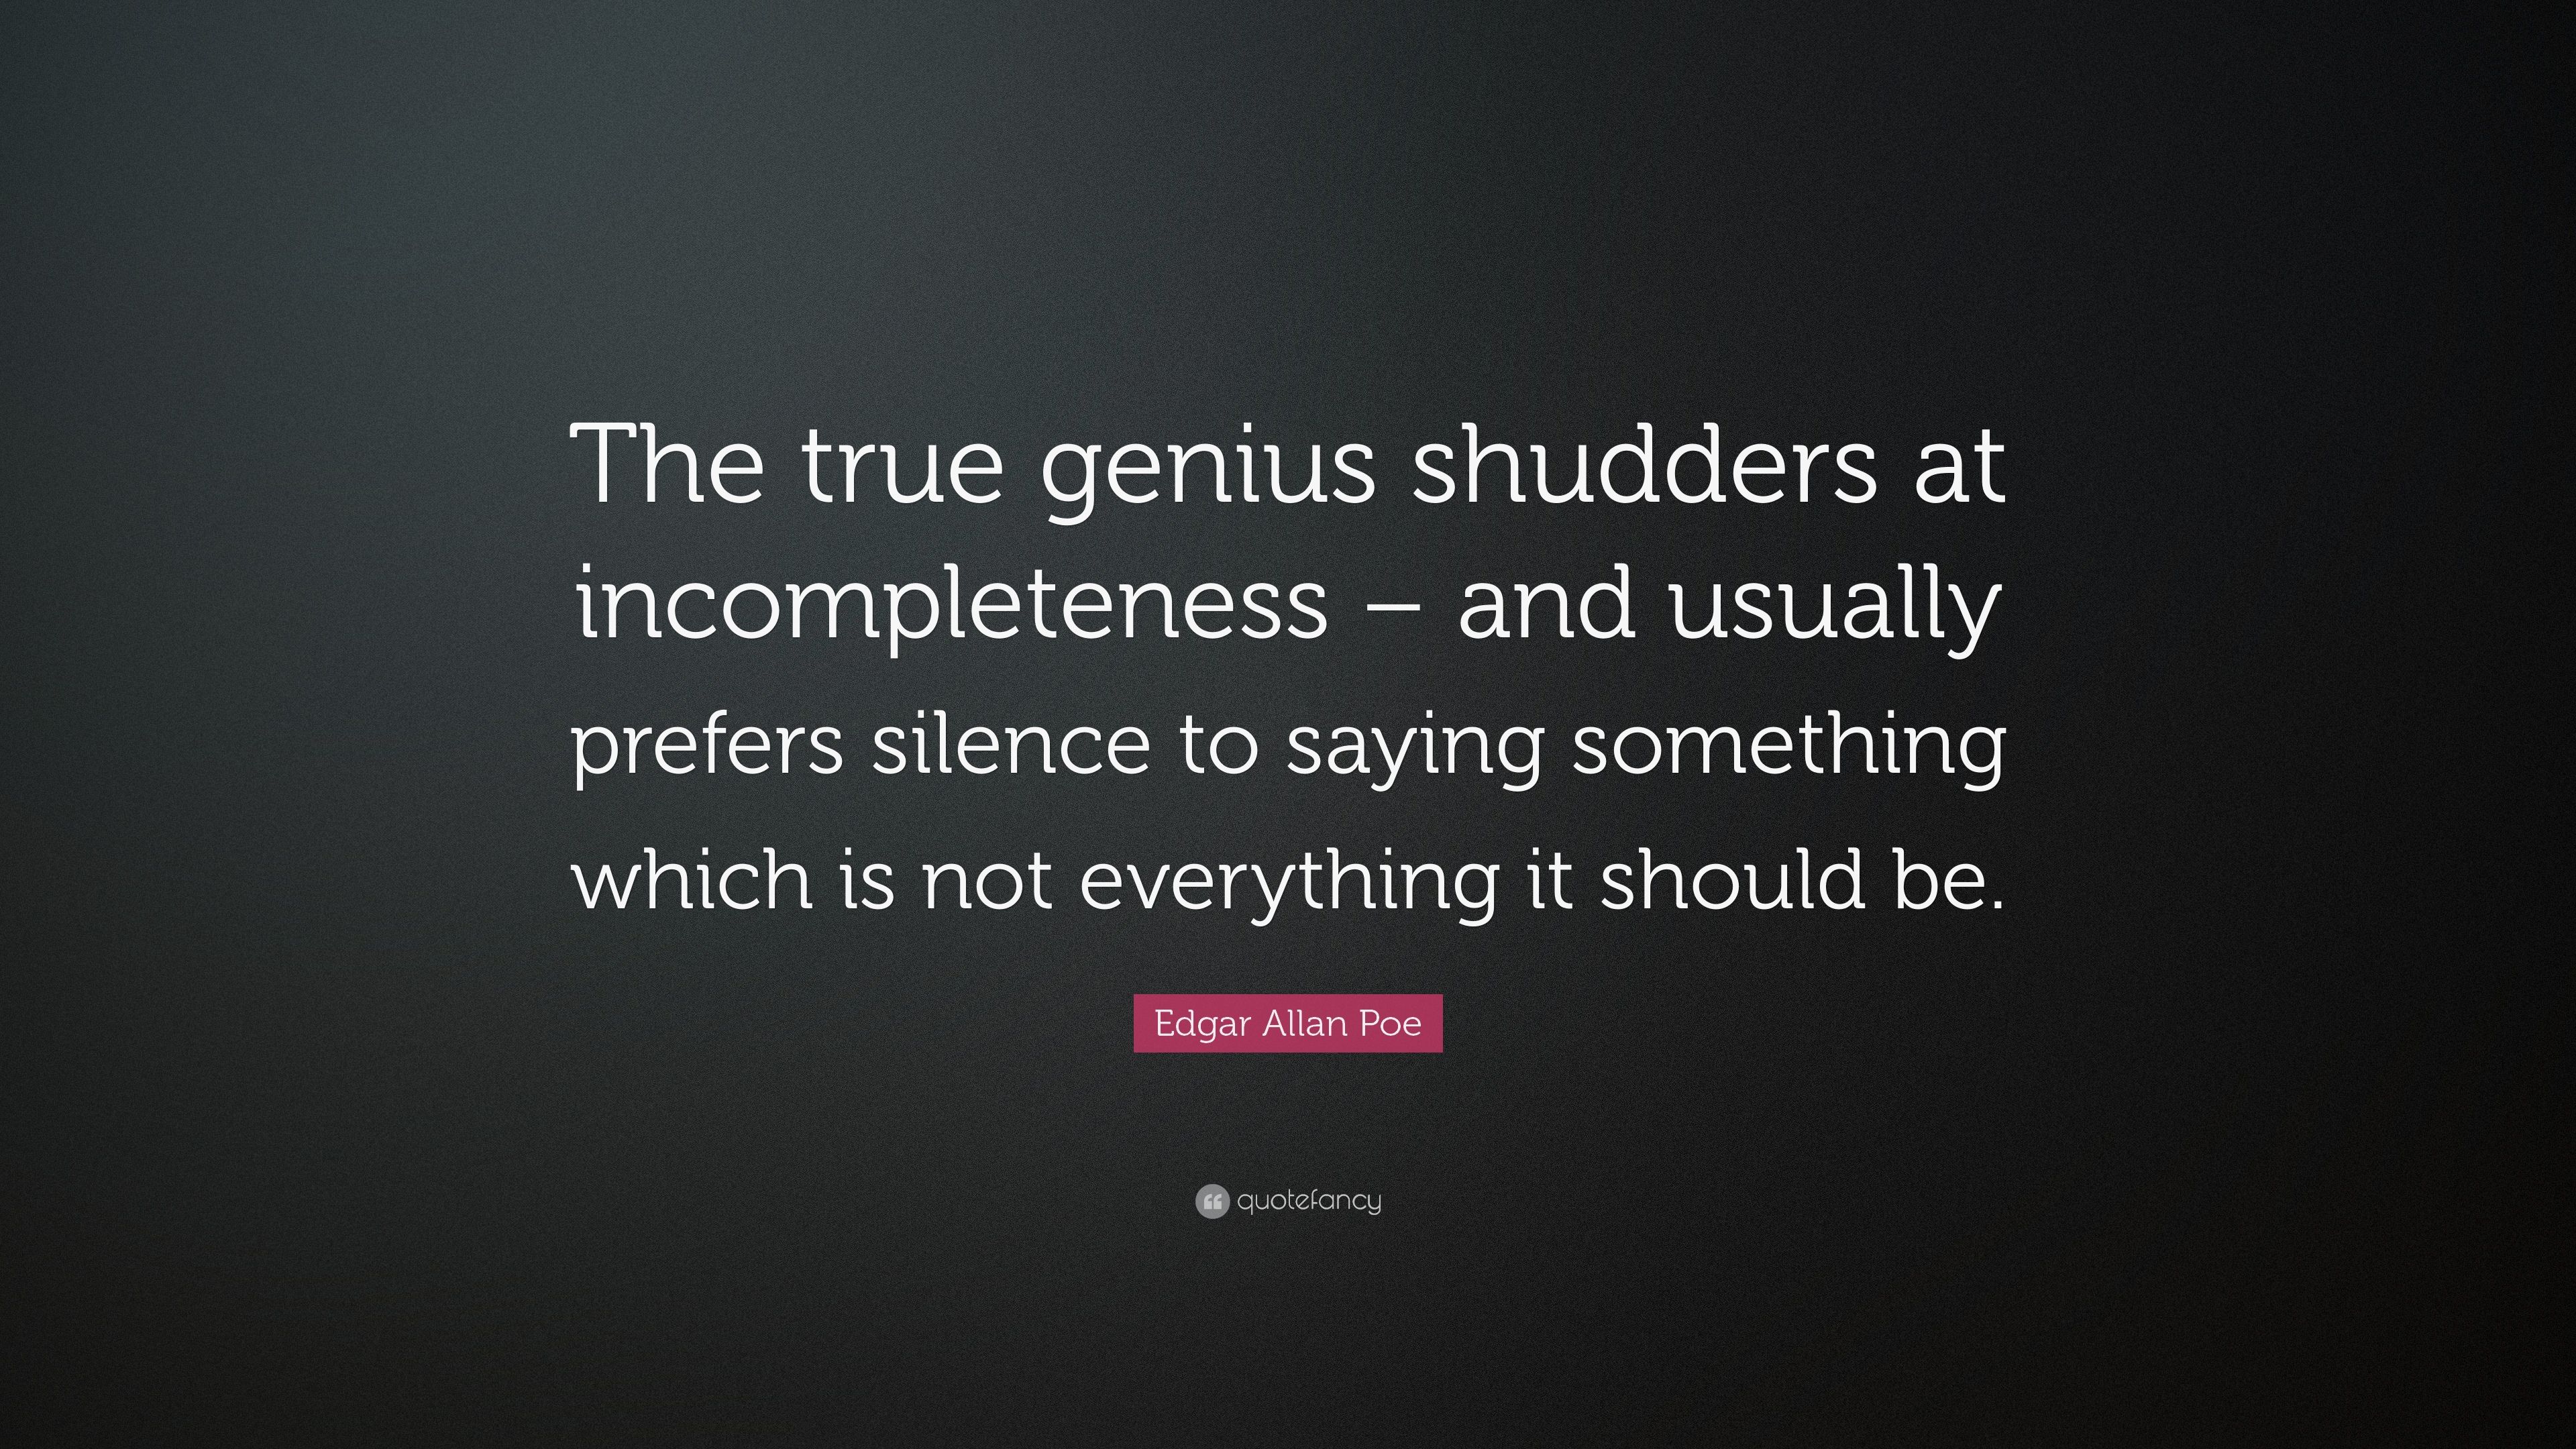 Edgar Allan Poe Quote: “The true genius shudders at incompleteness